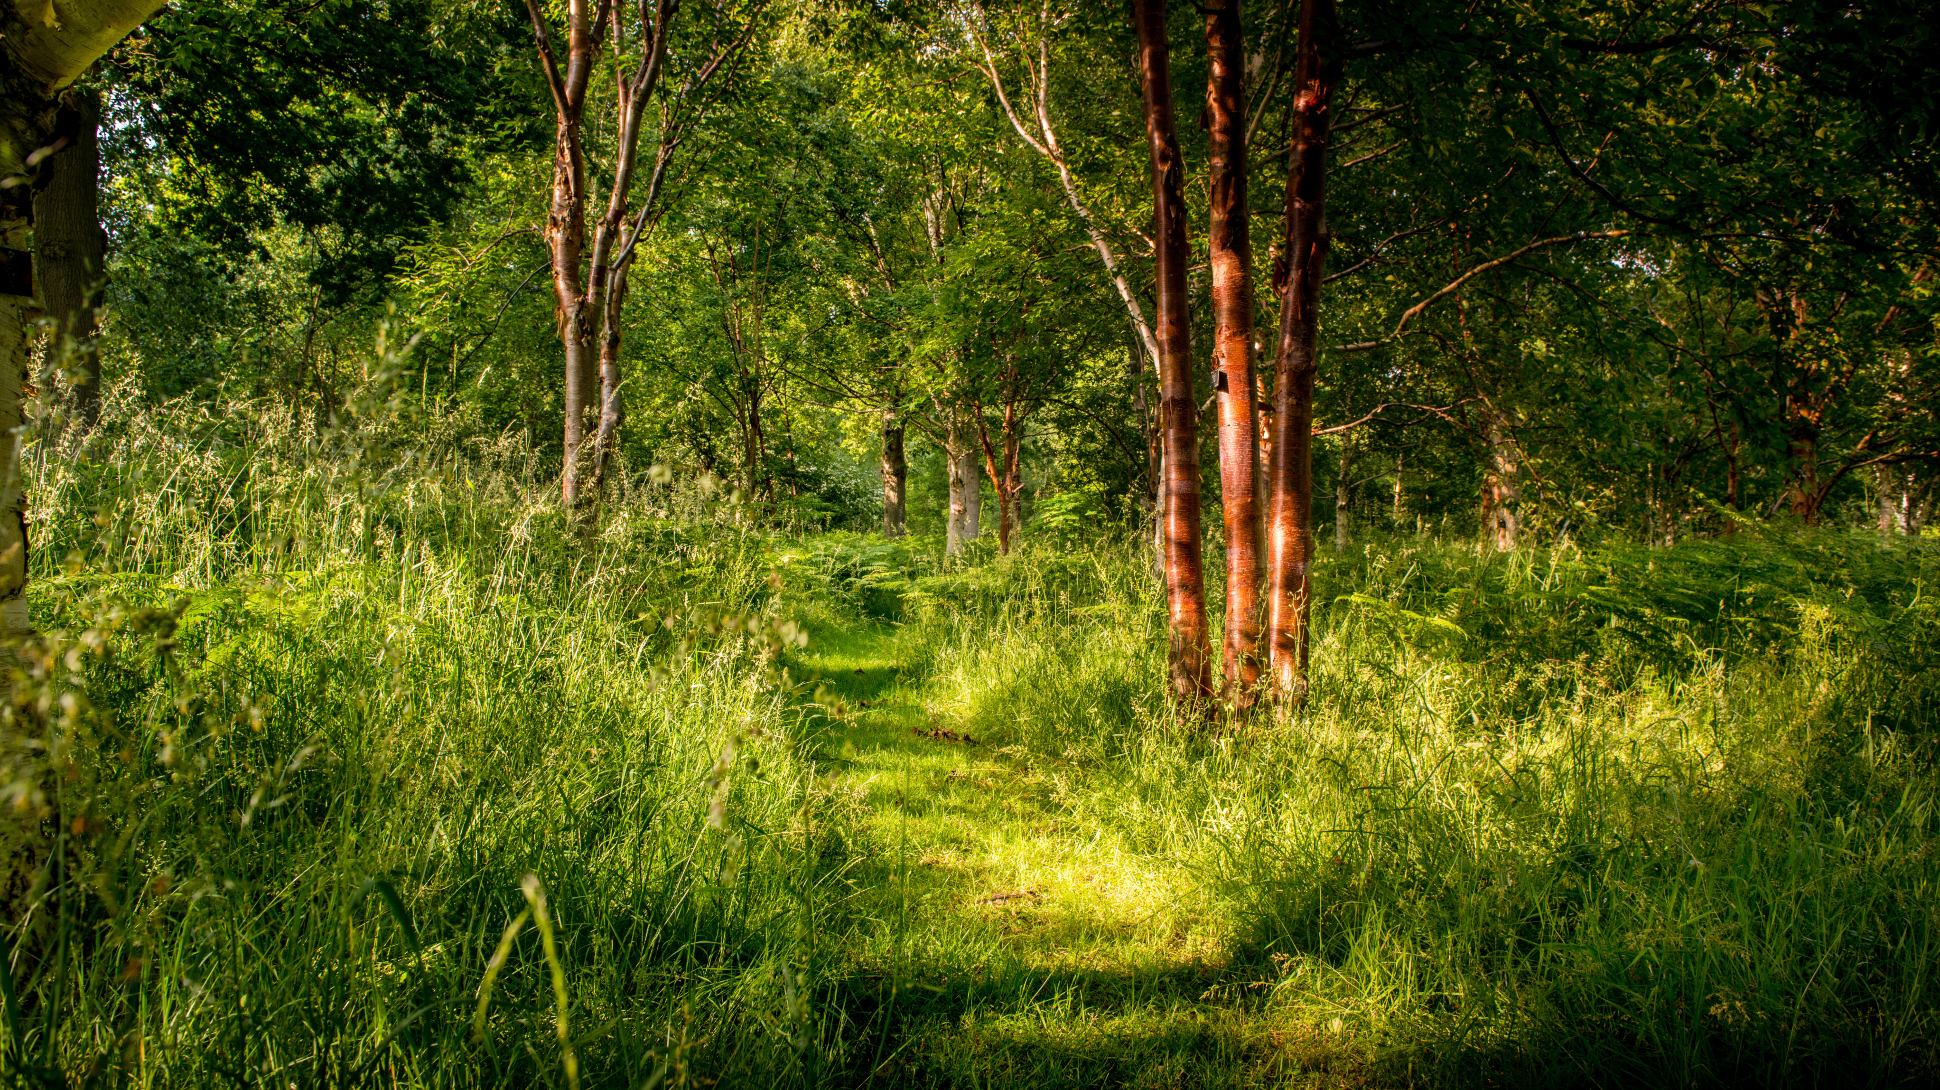 A path through a woodland with high grass